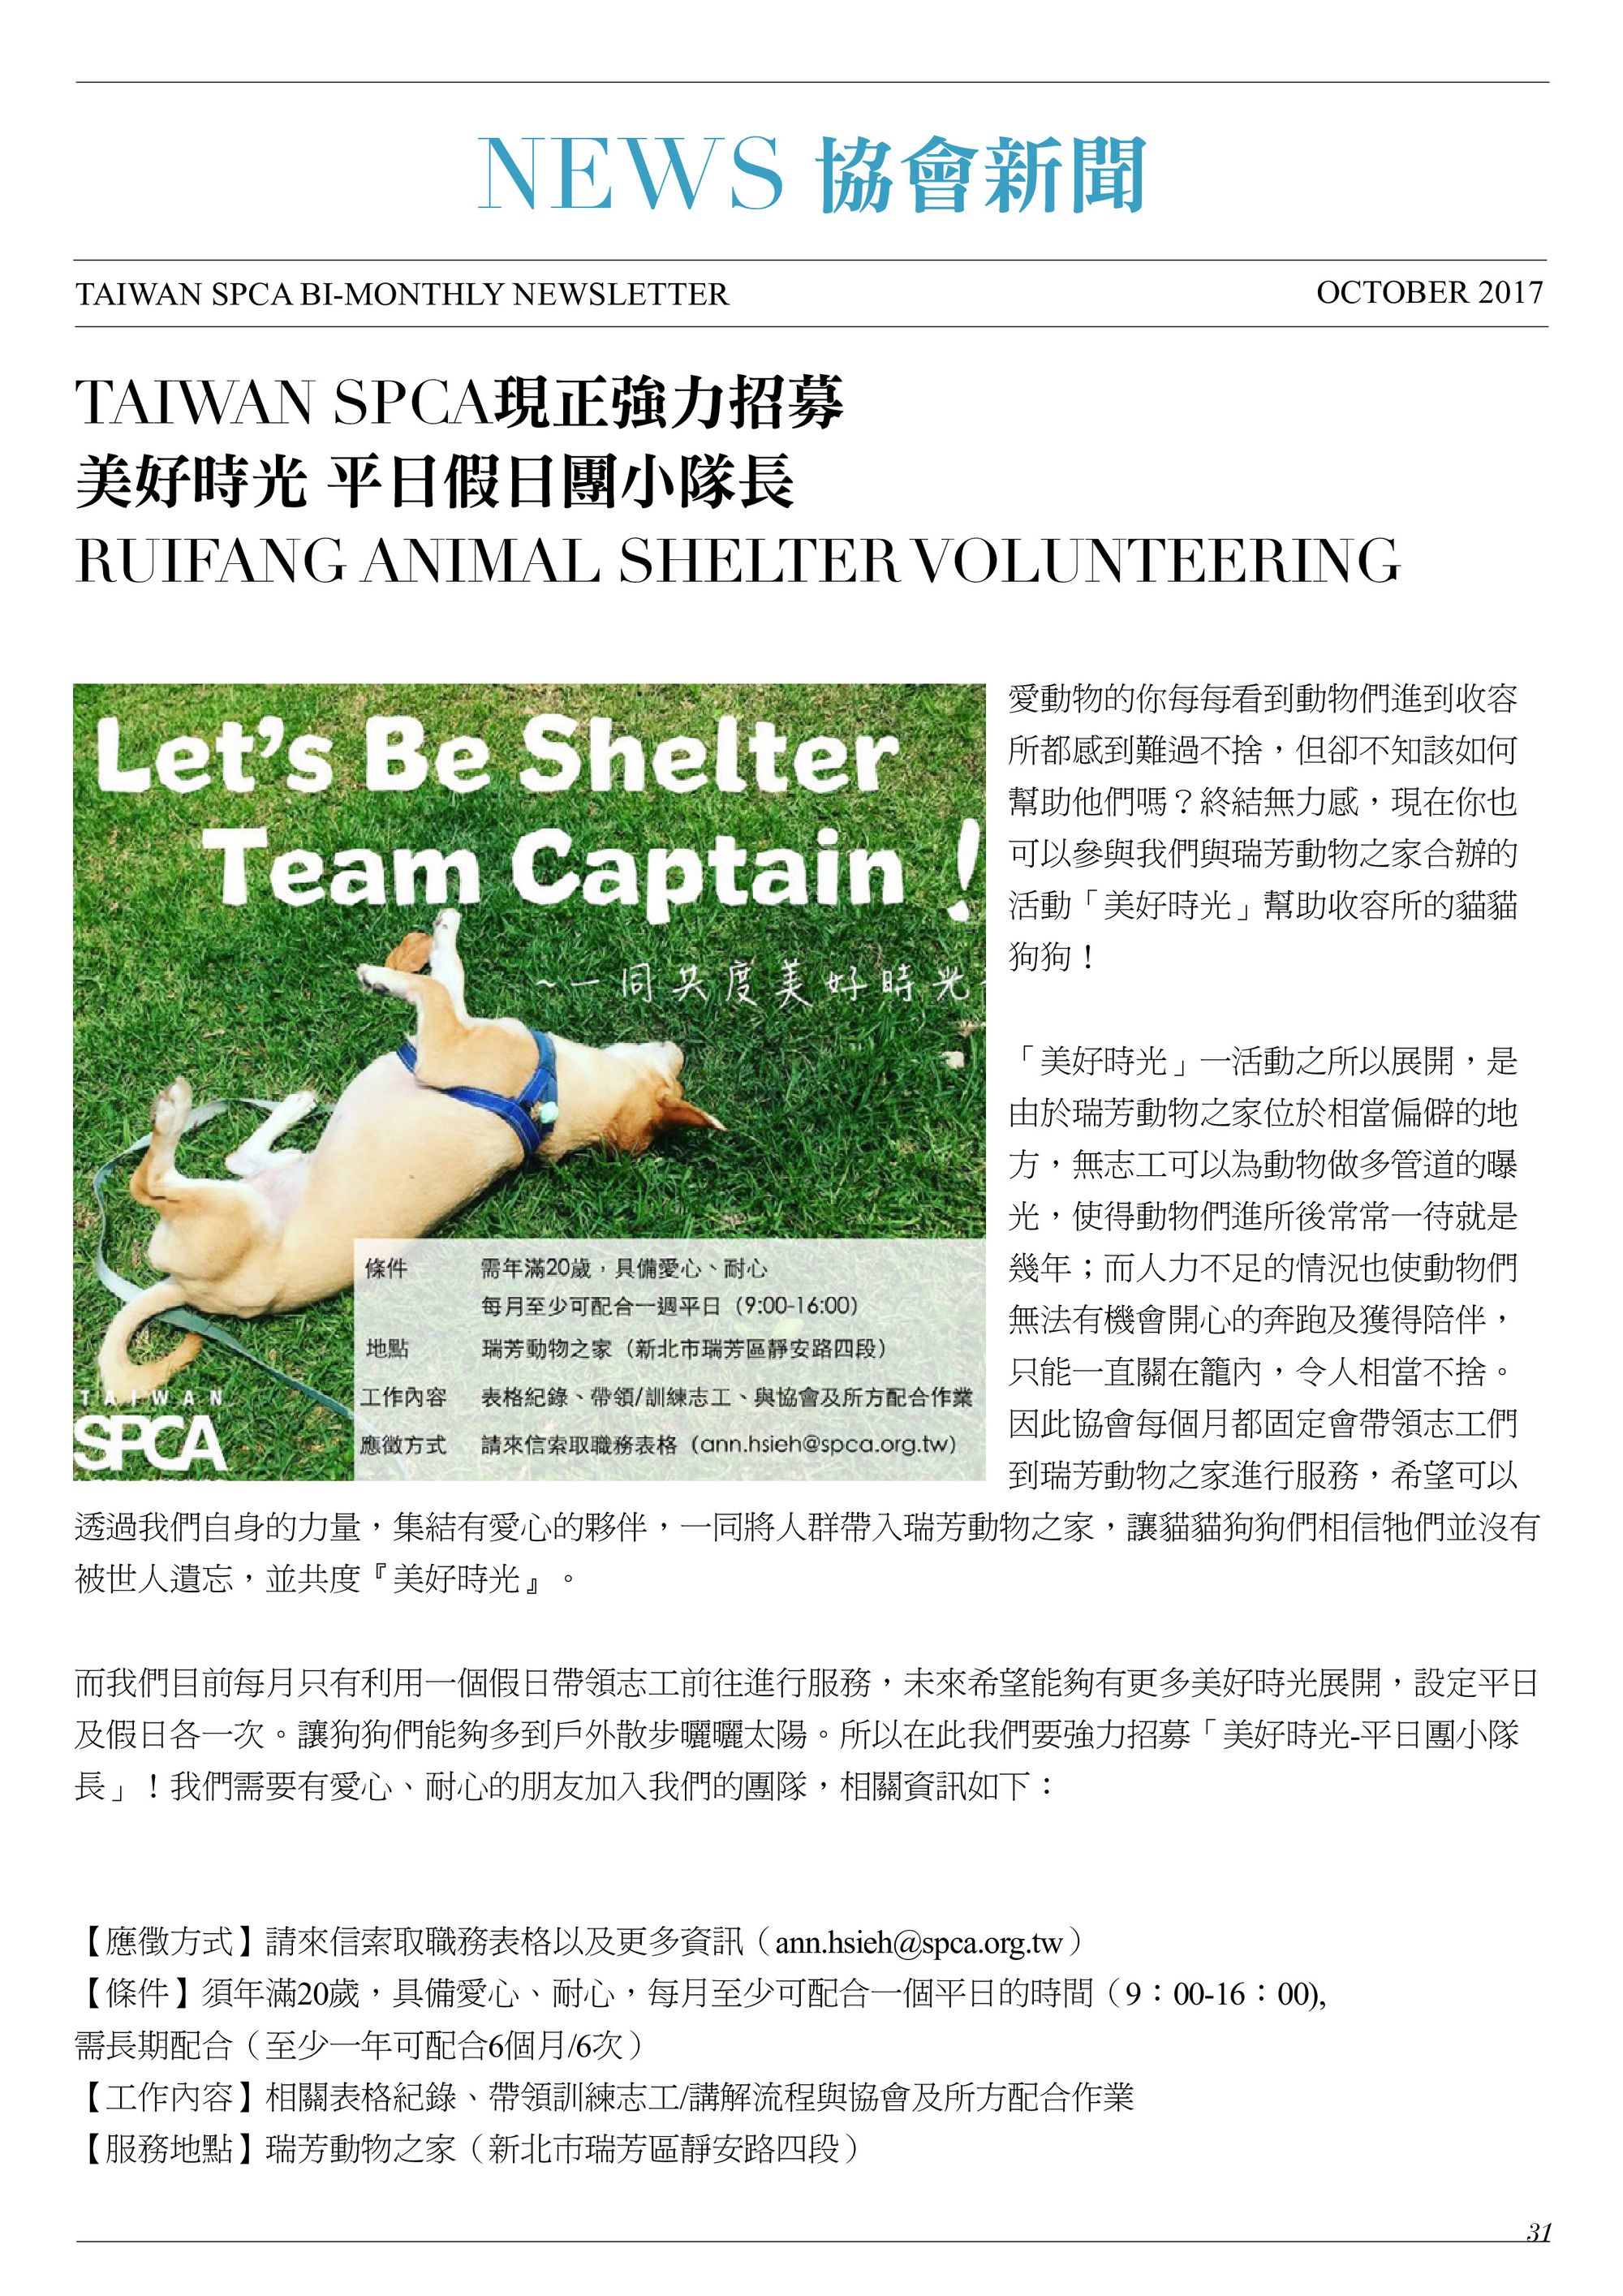 TAIWAN SPCA現正強力招募 美好時光 平日假日團小隊長